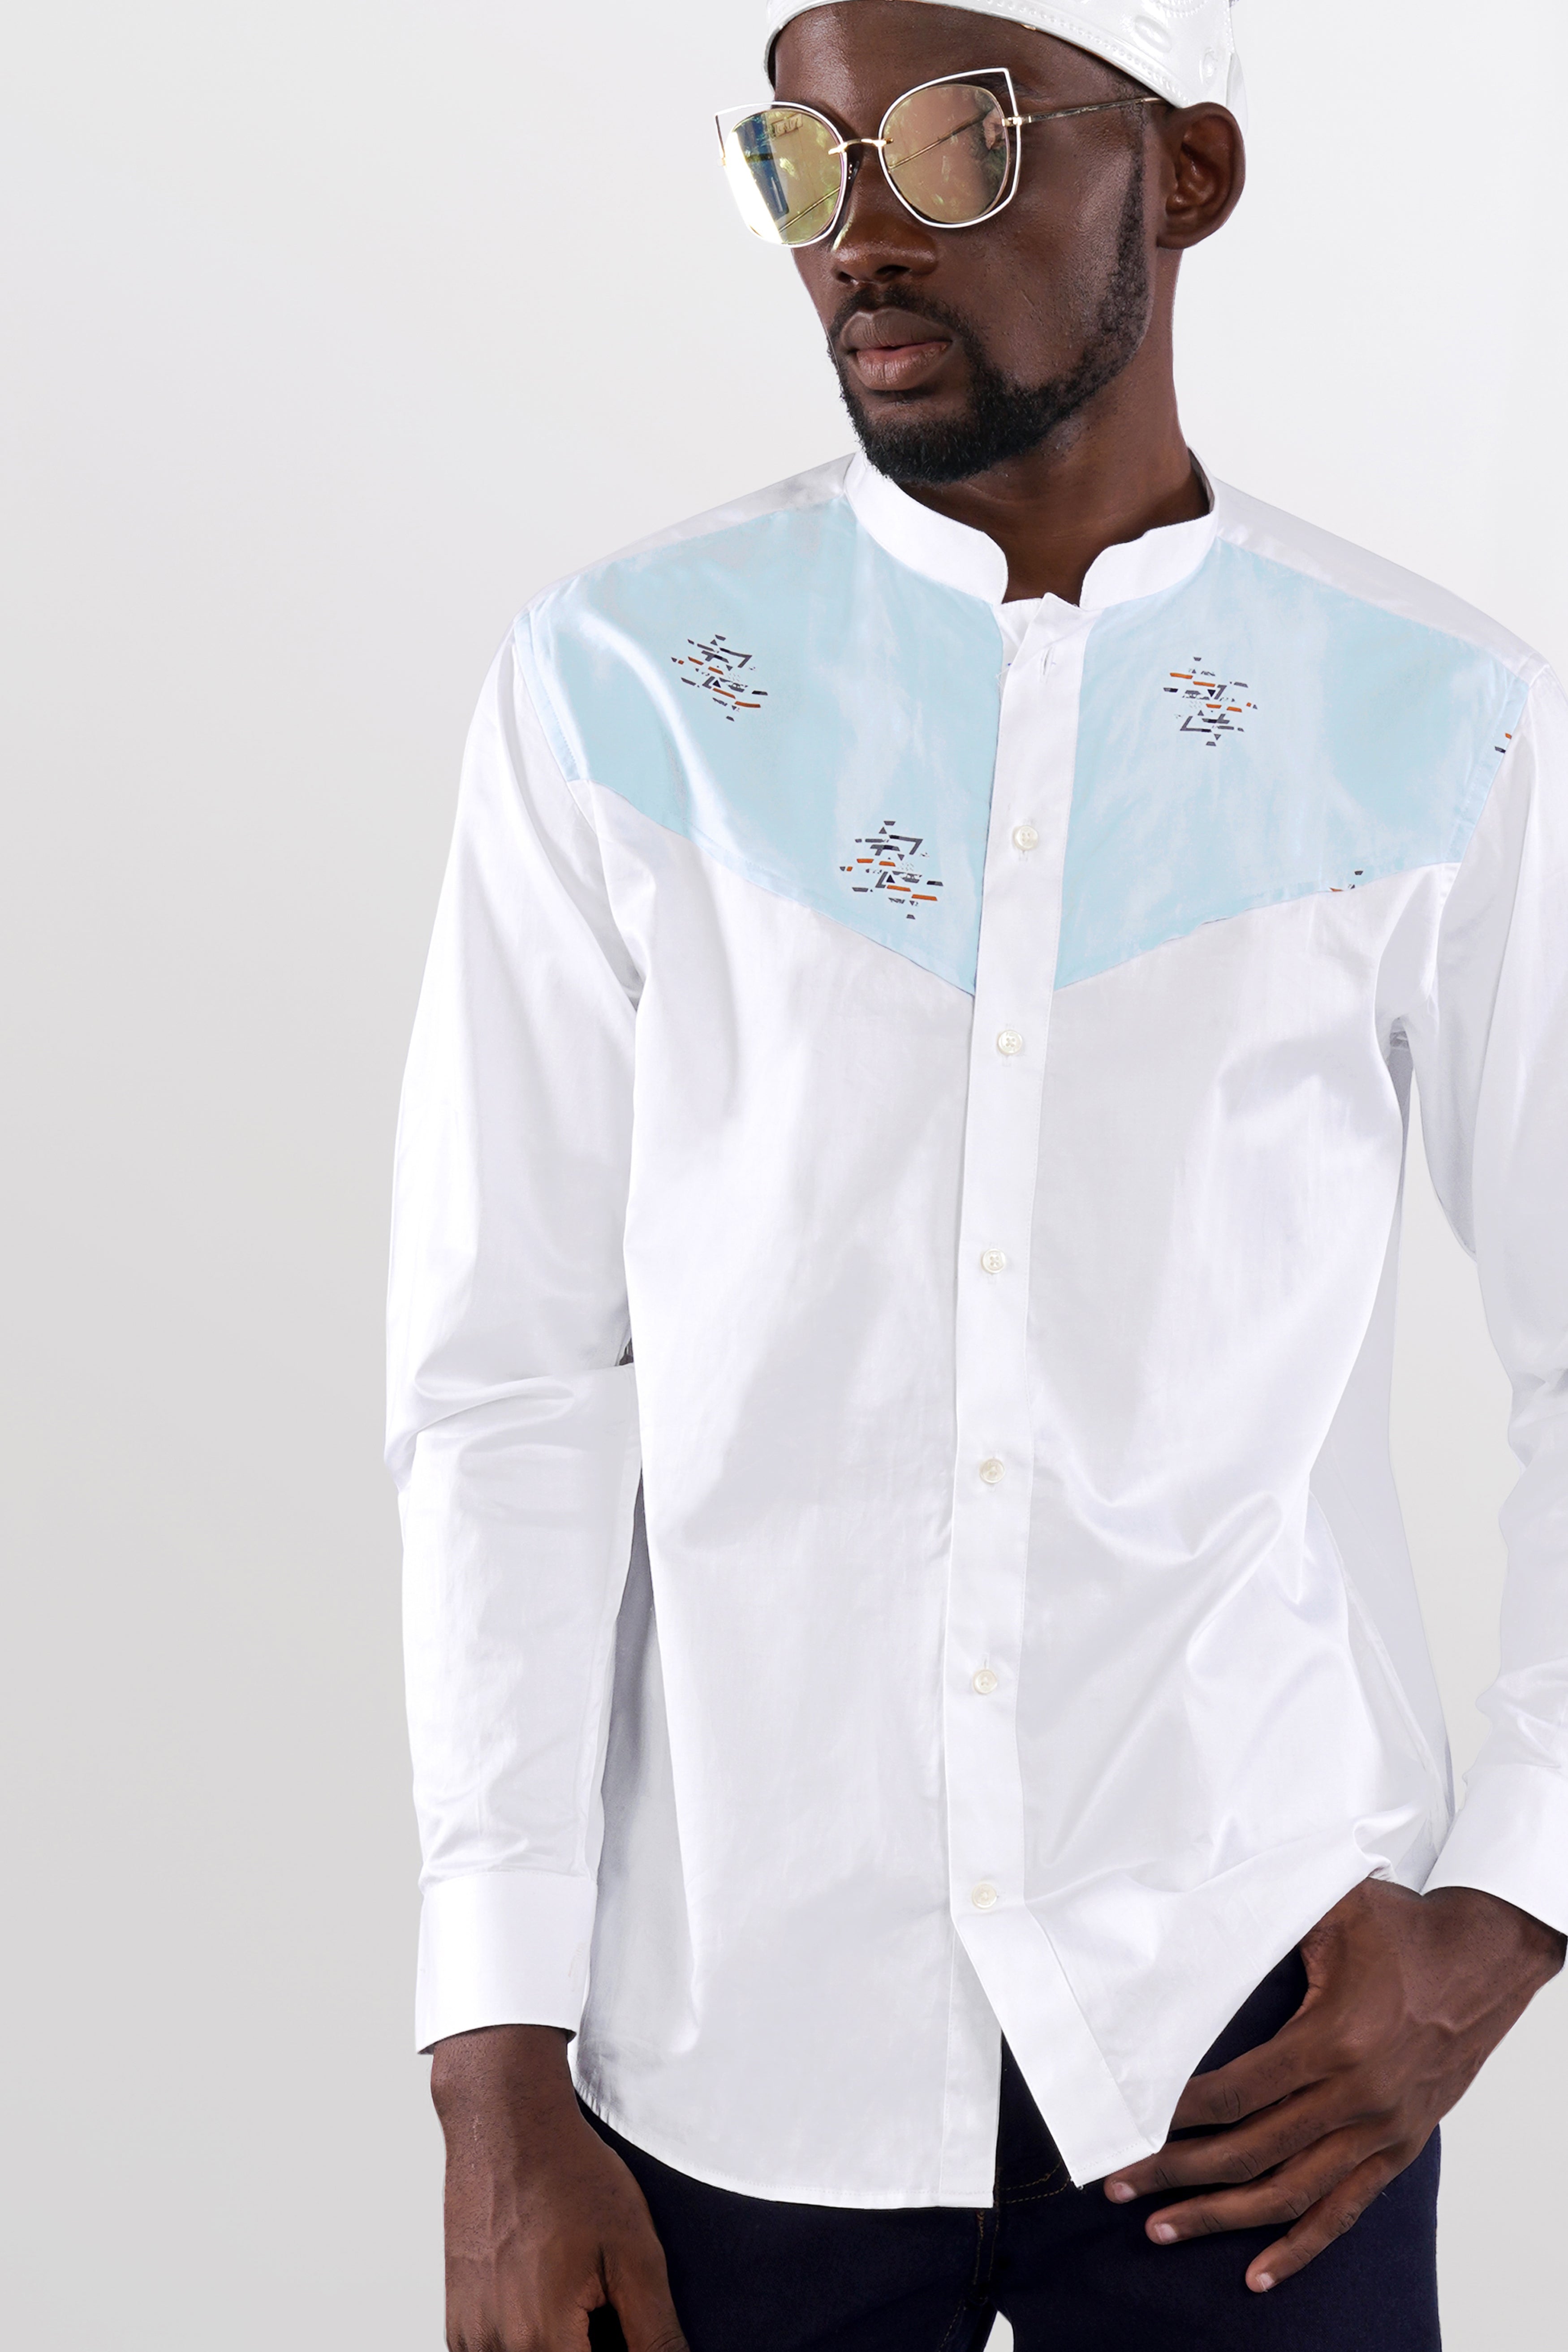 Bright White with  Ziggurat Printed Super Soft Premium Cotton Shirt